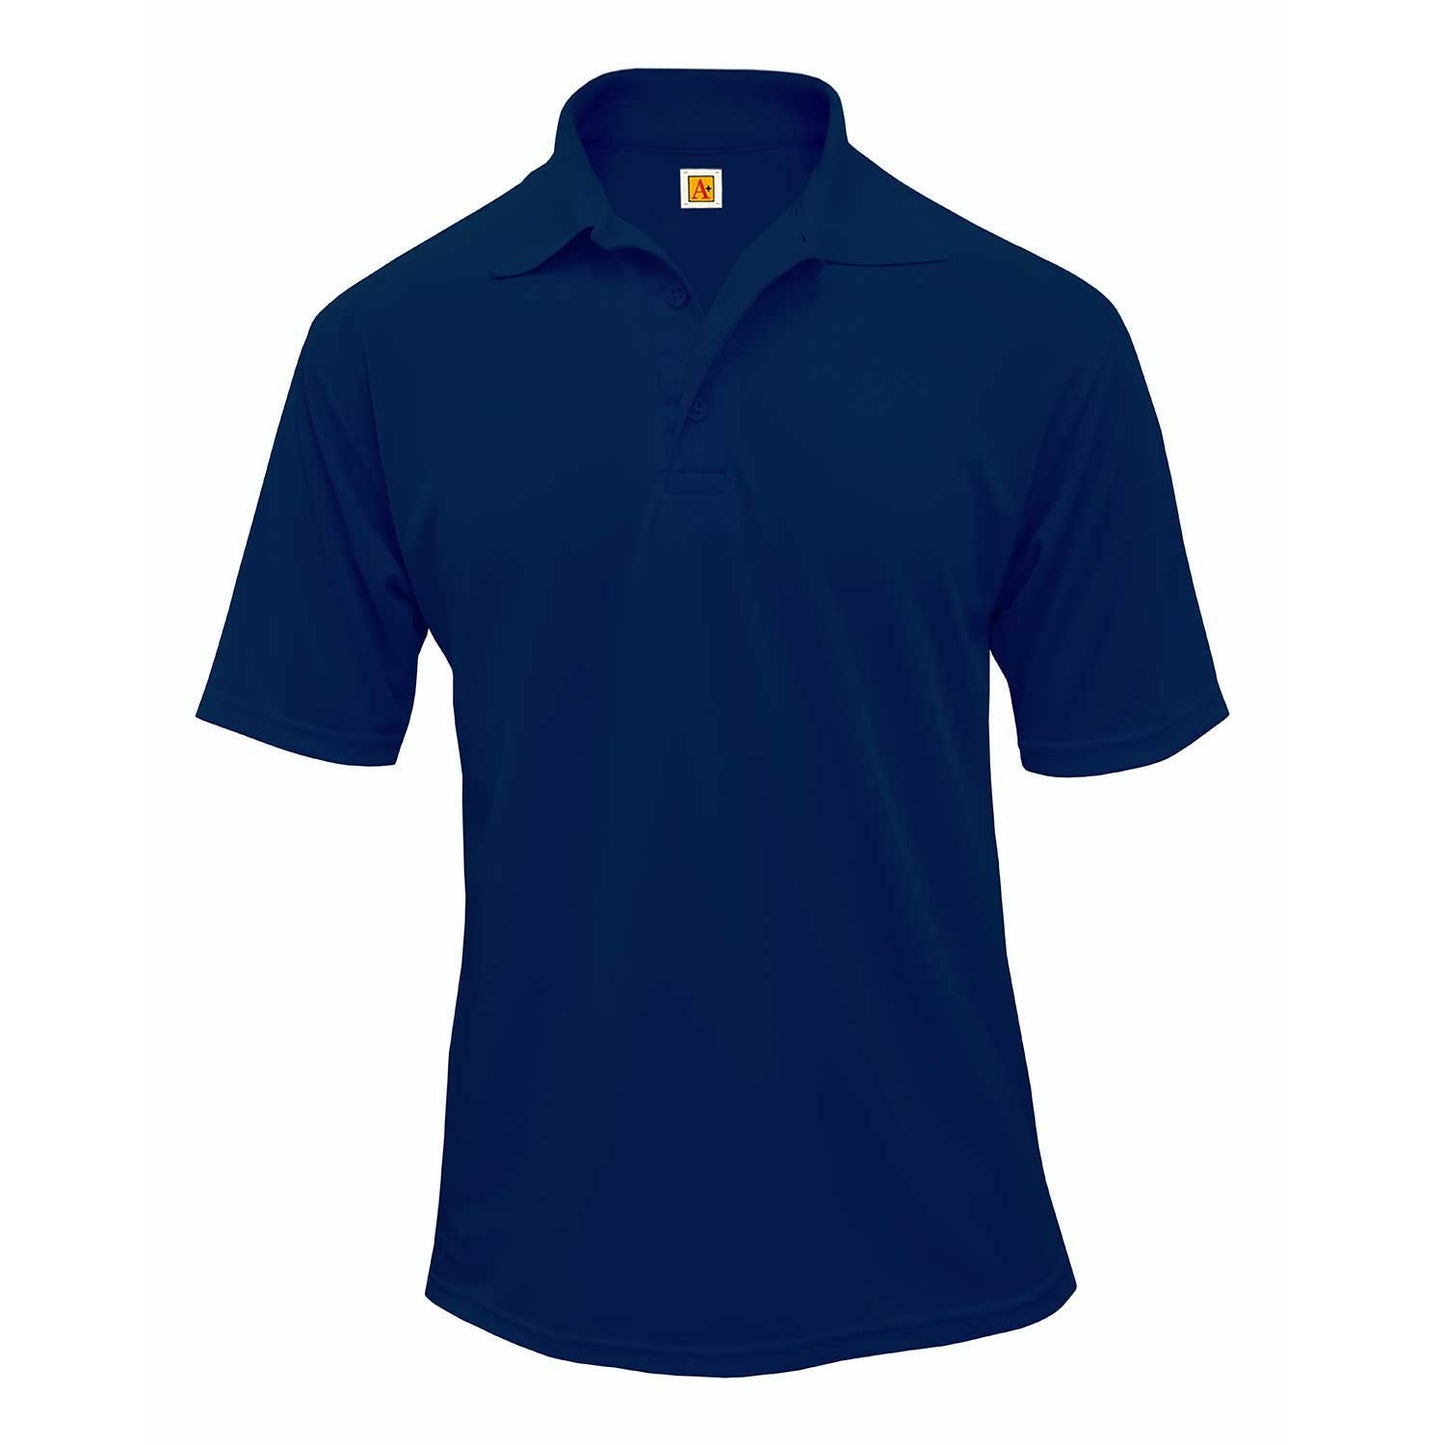 Performance Dri-fit Jersey Knit Short Sleeve Shirt (Unisex) - 1227